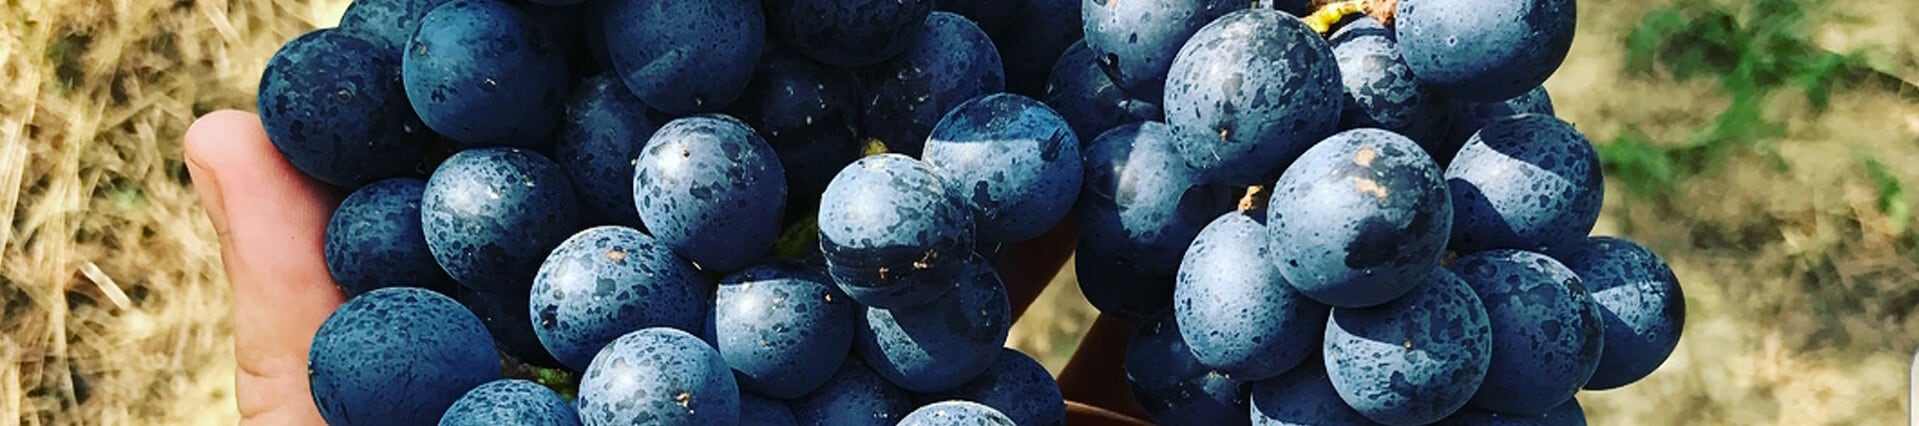 Our biodynamic wines - Burgundy